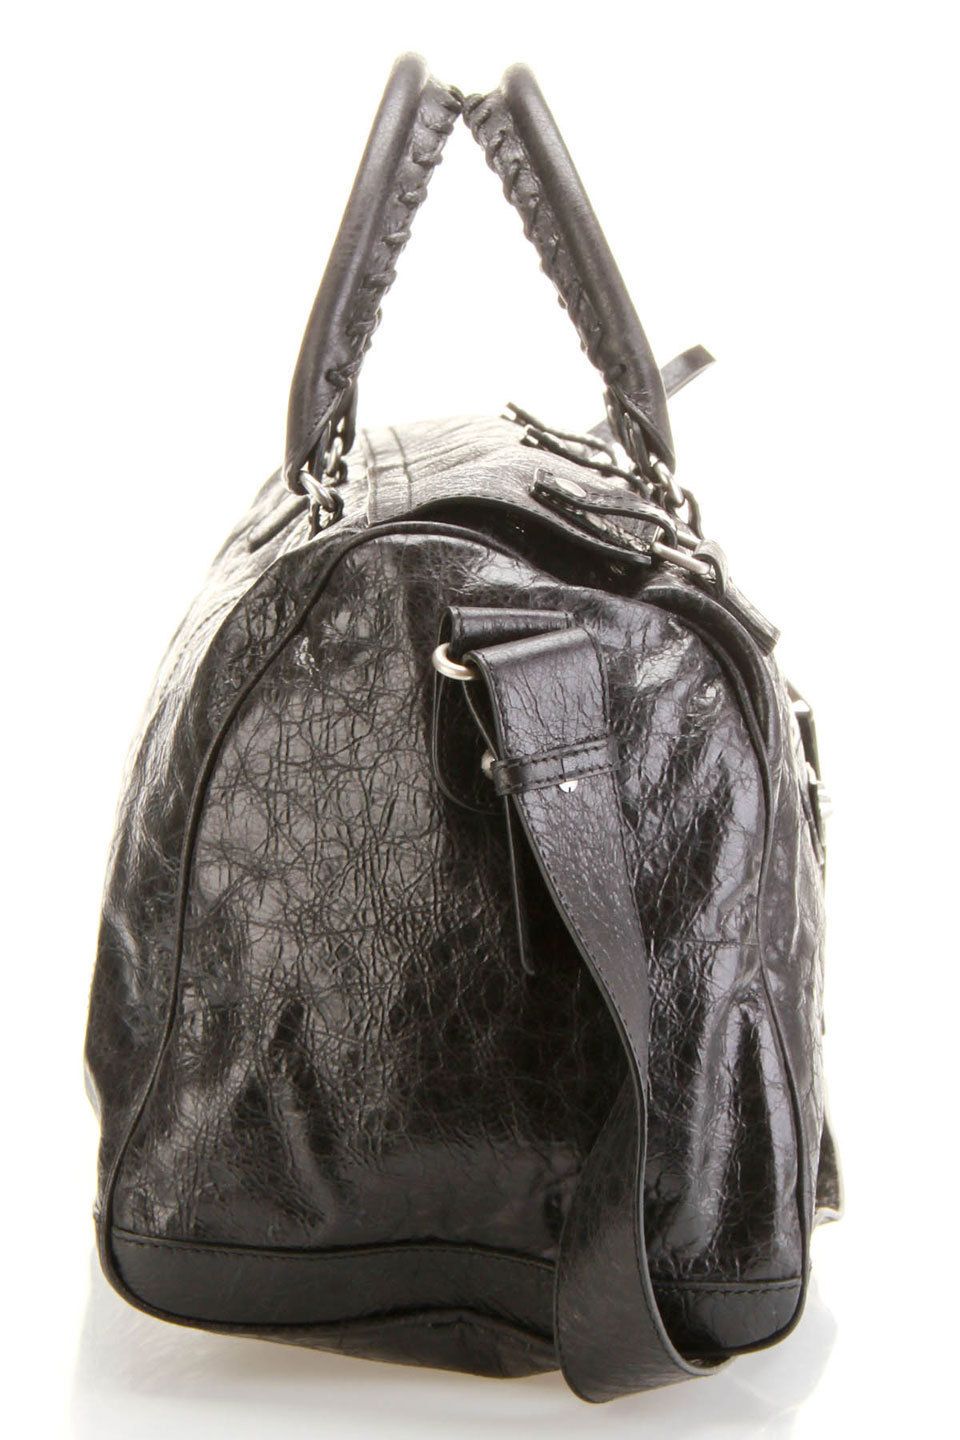 Balenciaga Mens Squash Handbag in Black with Silver Zipper Pockets 100 